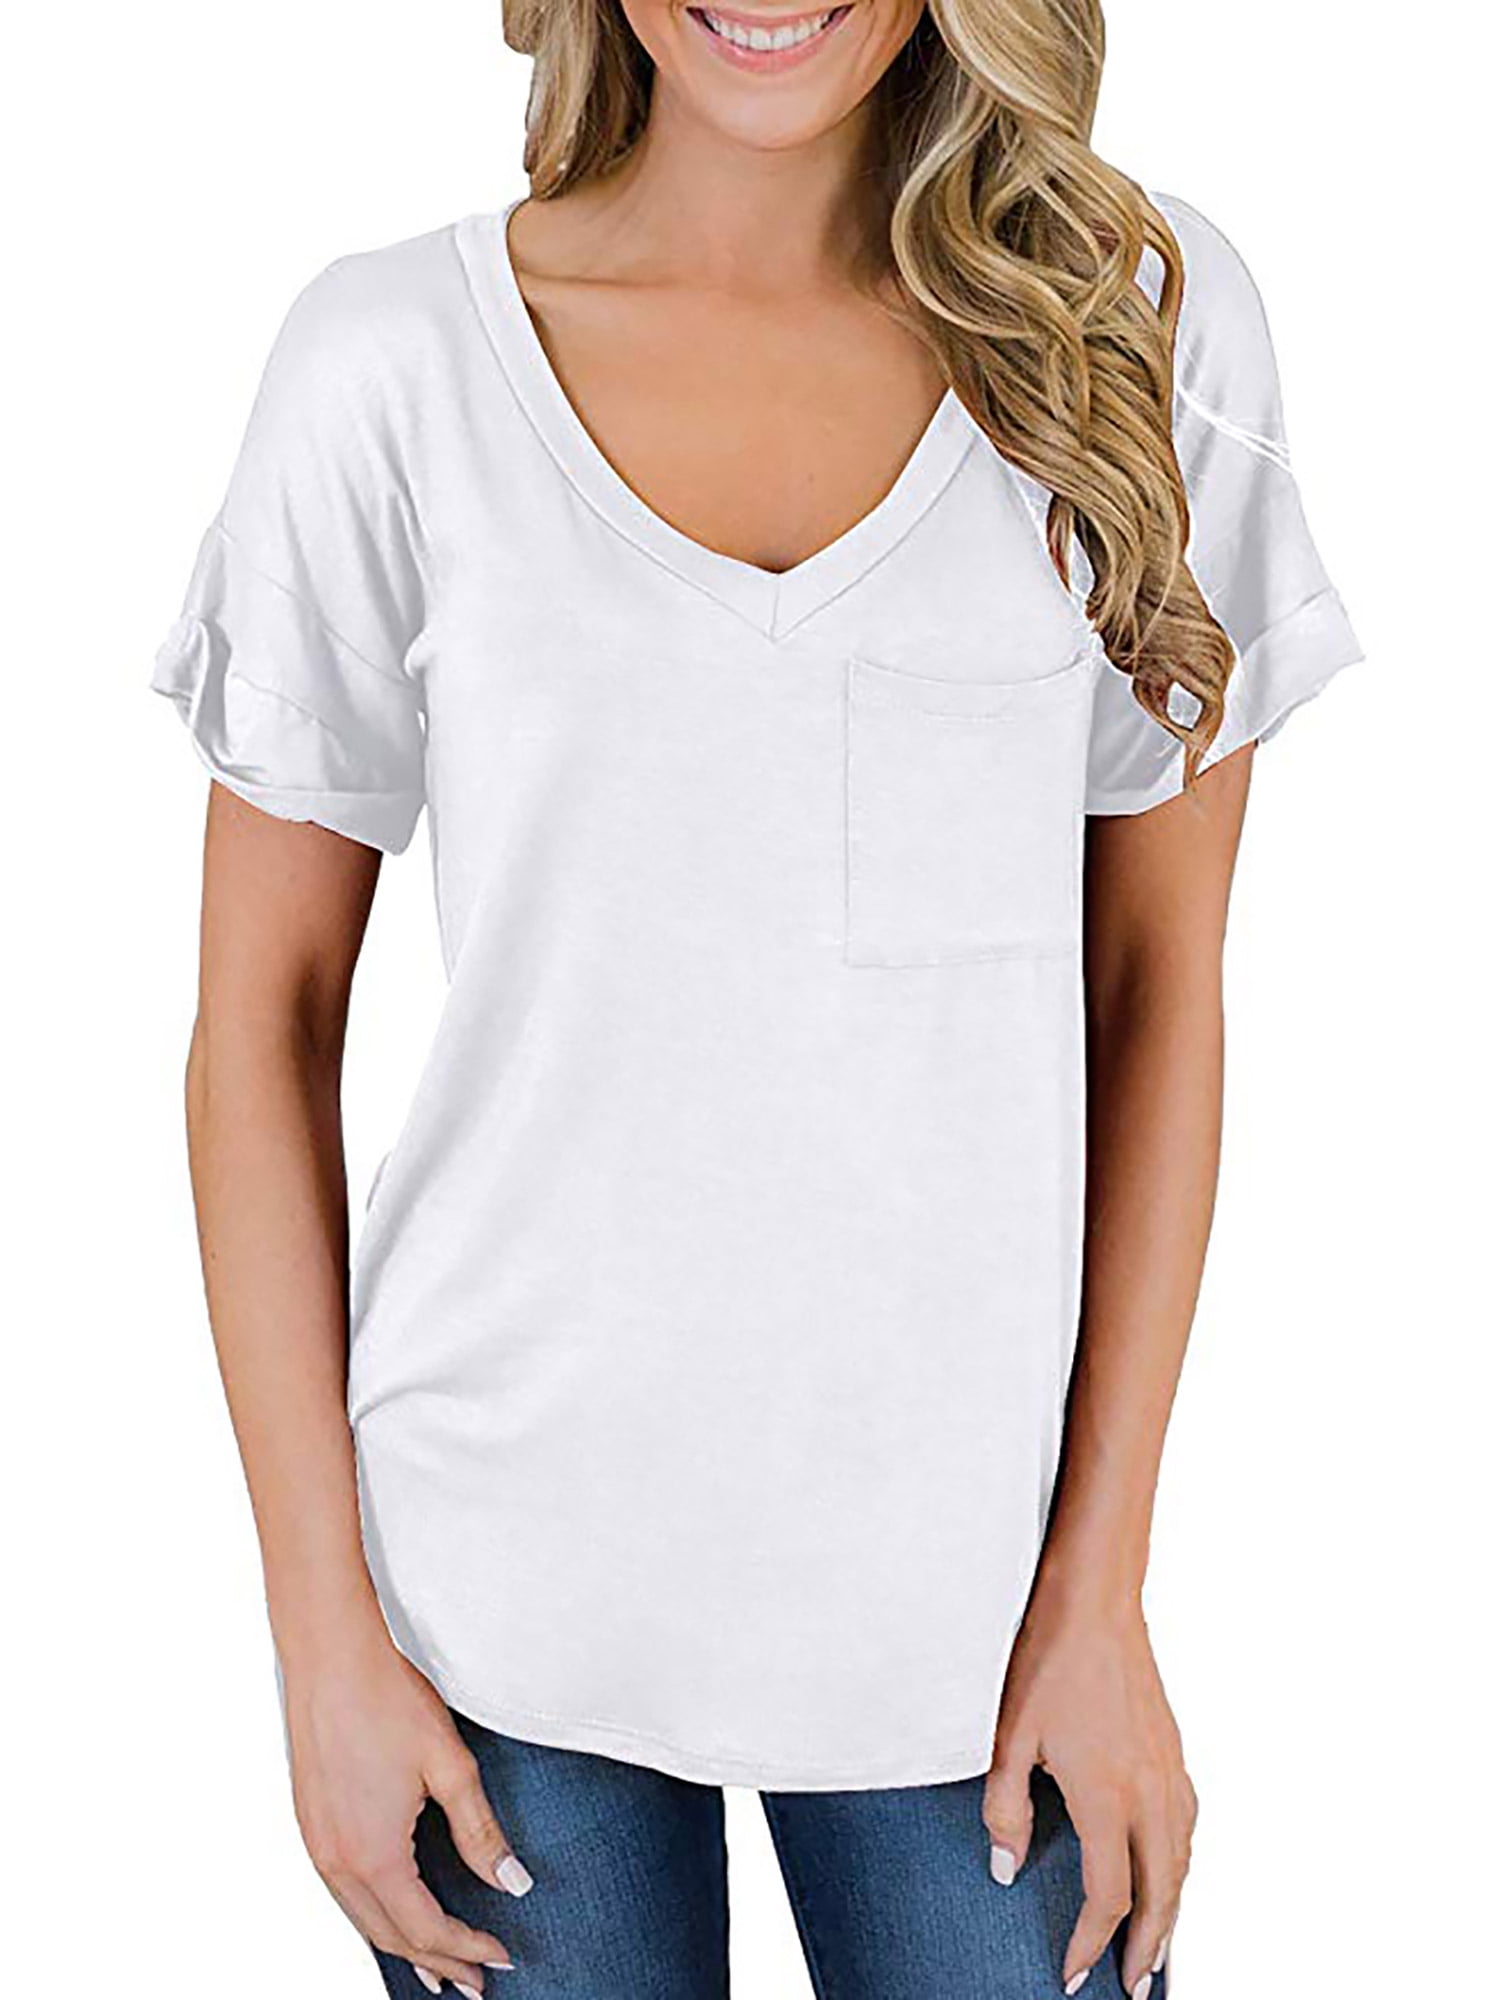 Selfieee - Selfieee Women's Loose T Shirts V Neck Short Sleeve Tops ...